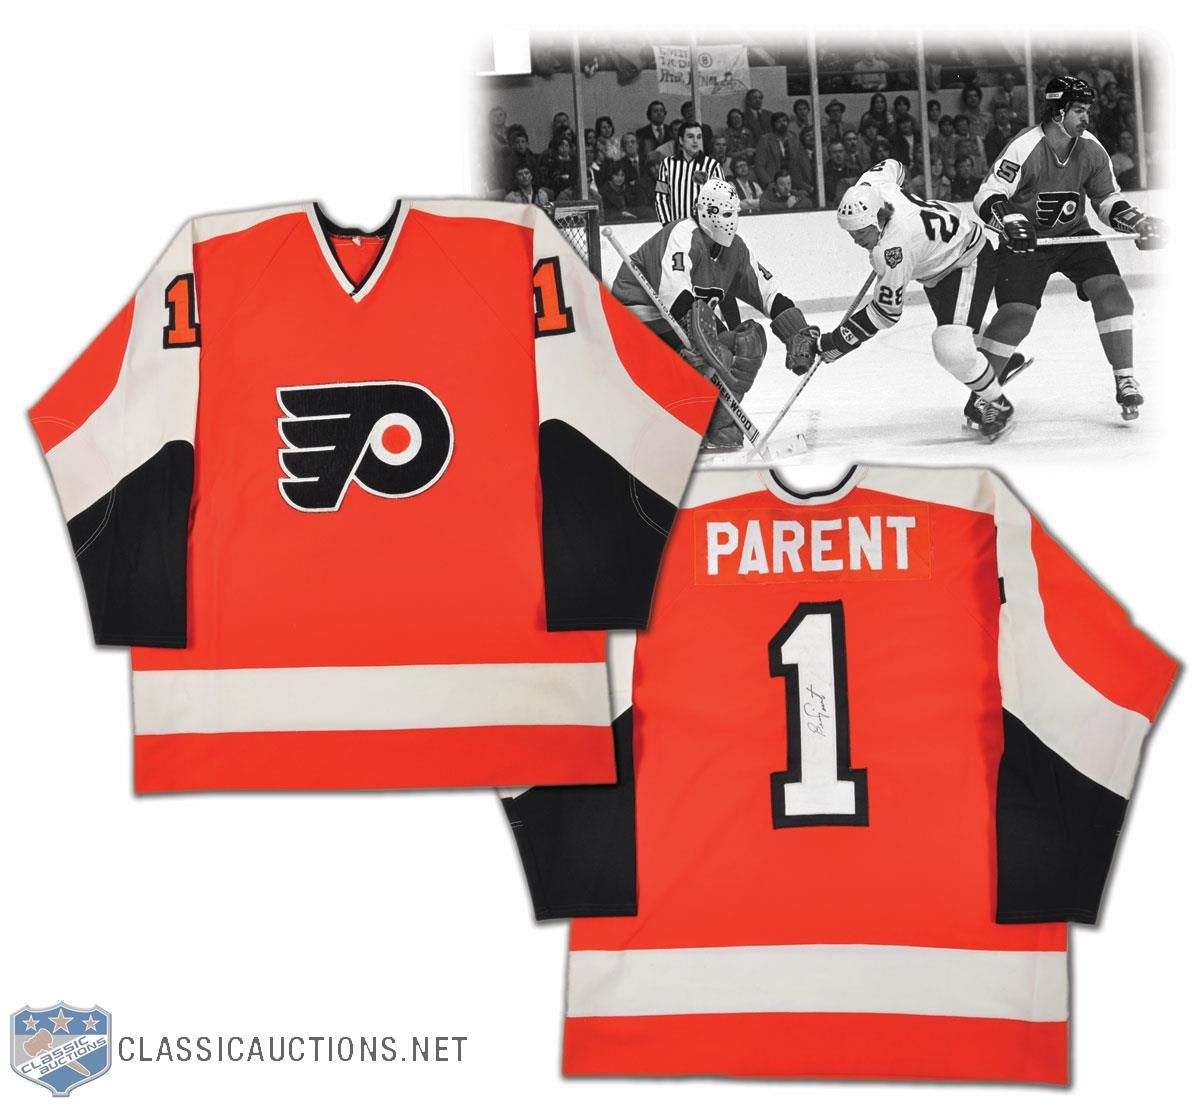 Bernie Parent's 1975-77 Philadelphia Flyers Signed Game-Worn